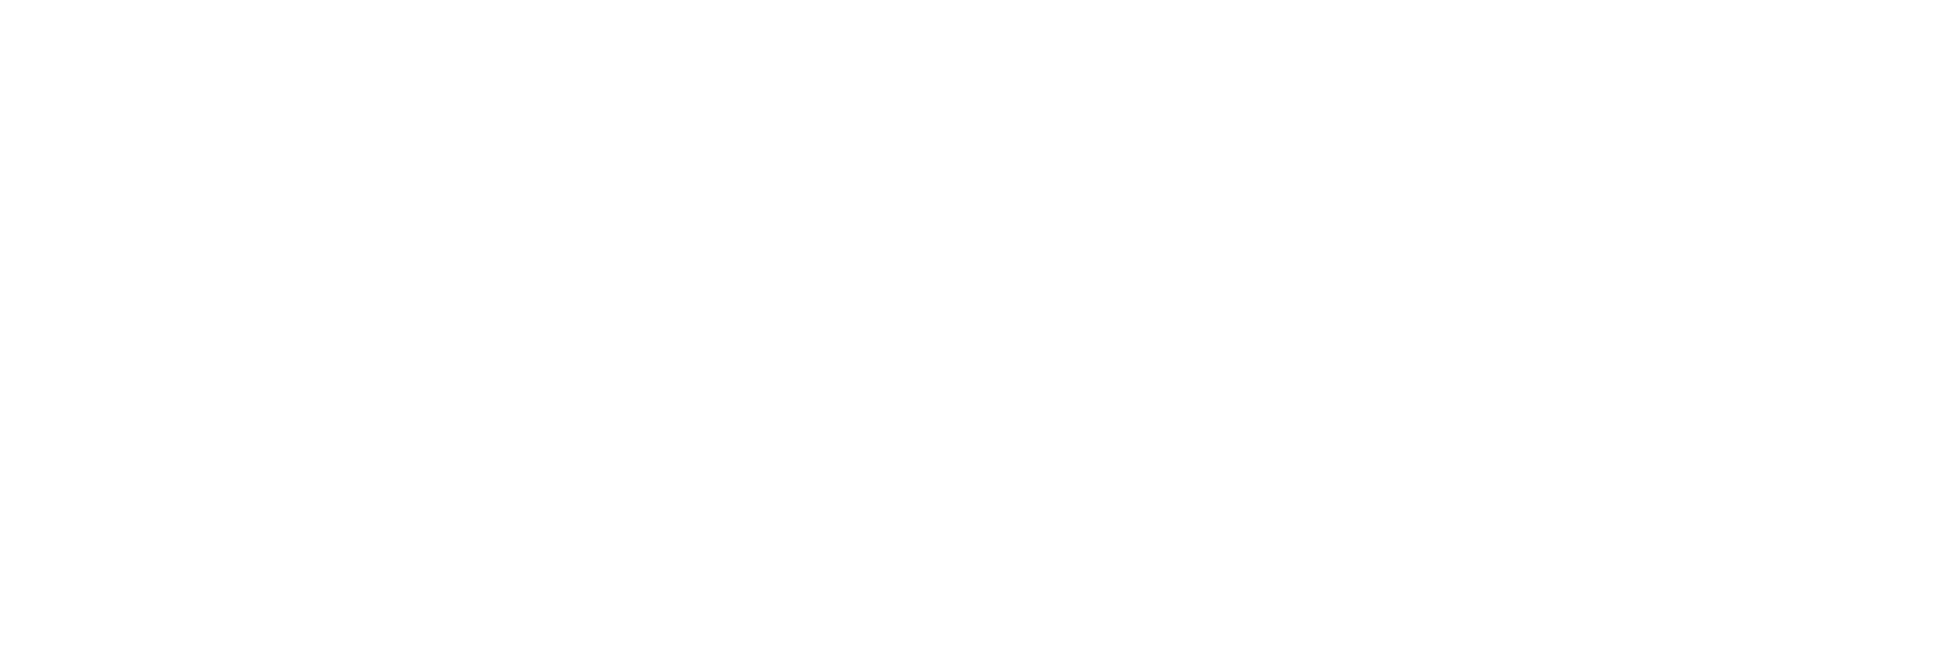 AniCura Askøy Dyreklinikk logo